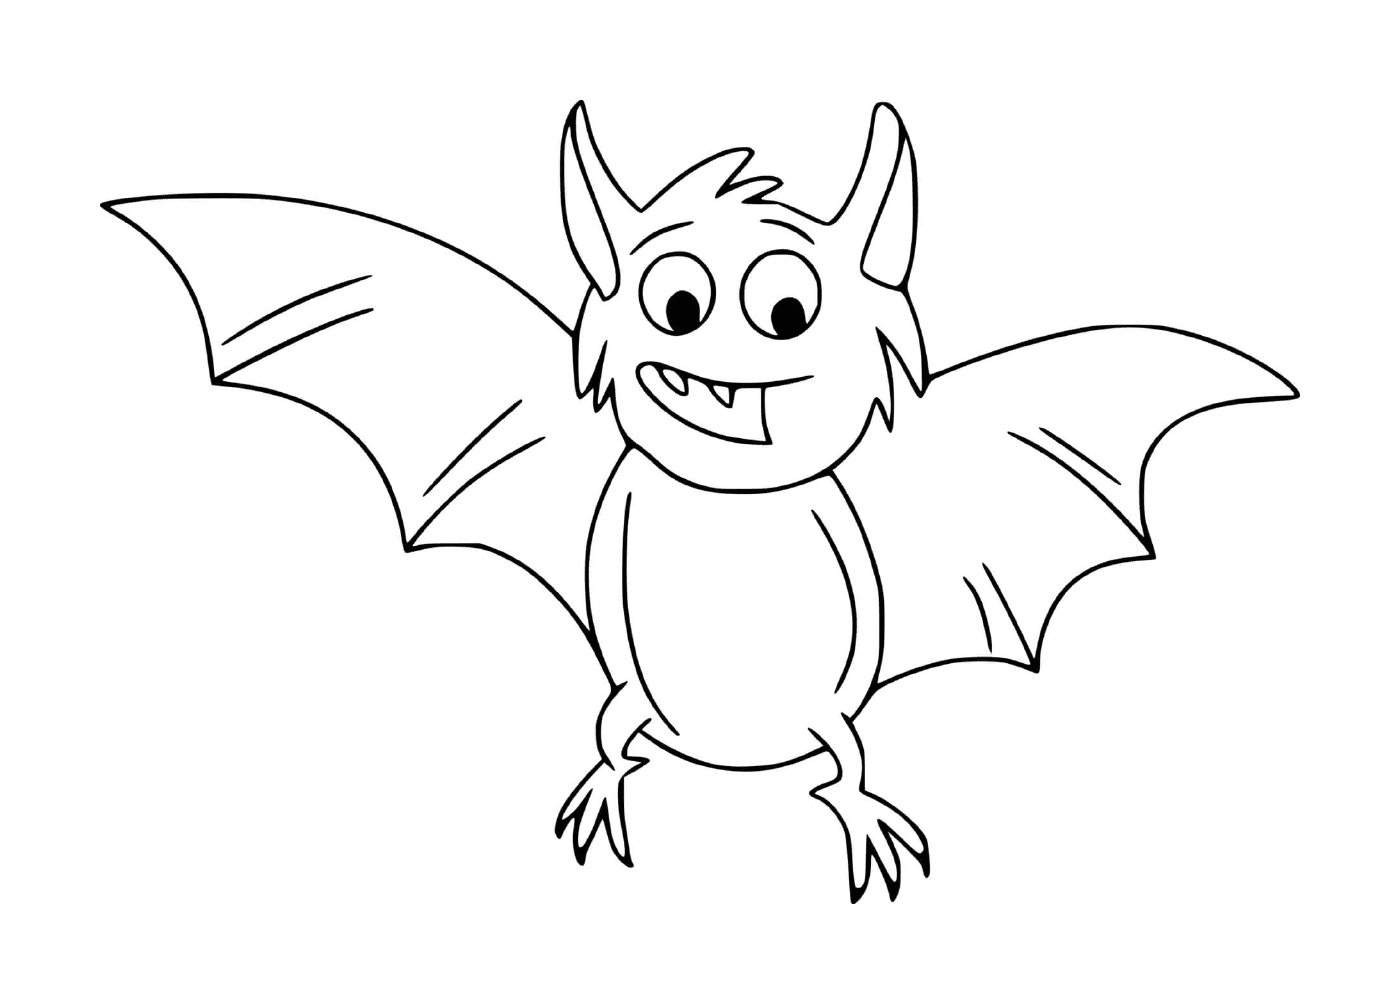  little scared bat 